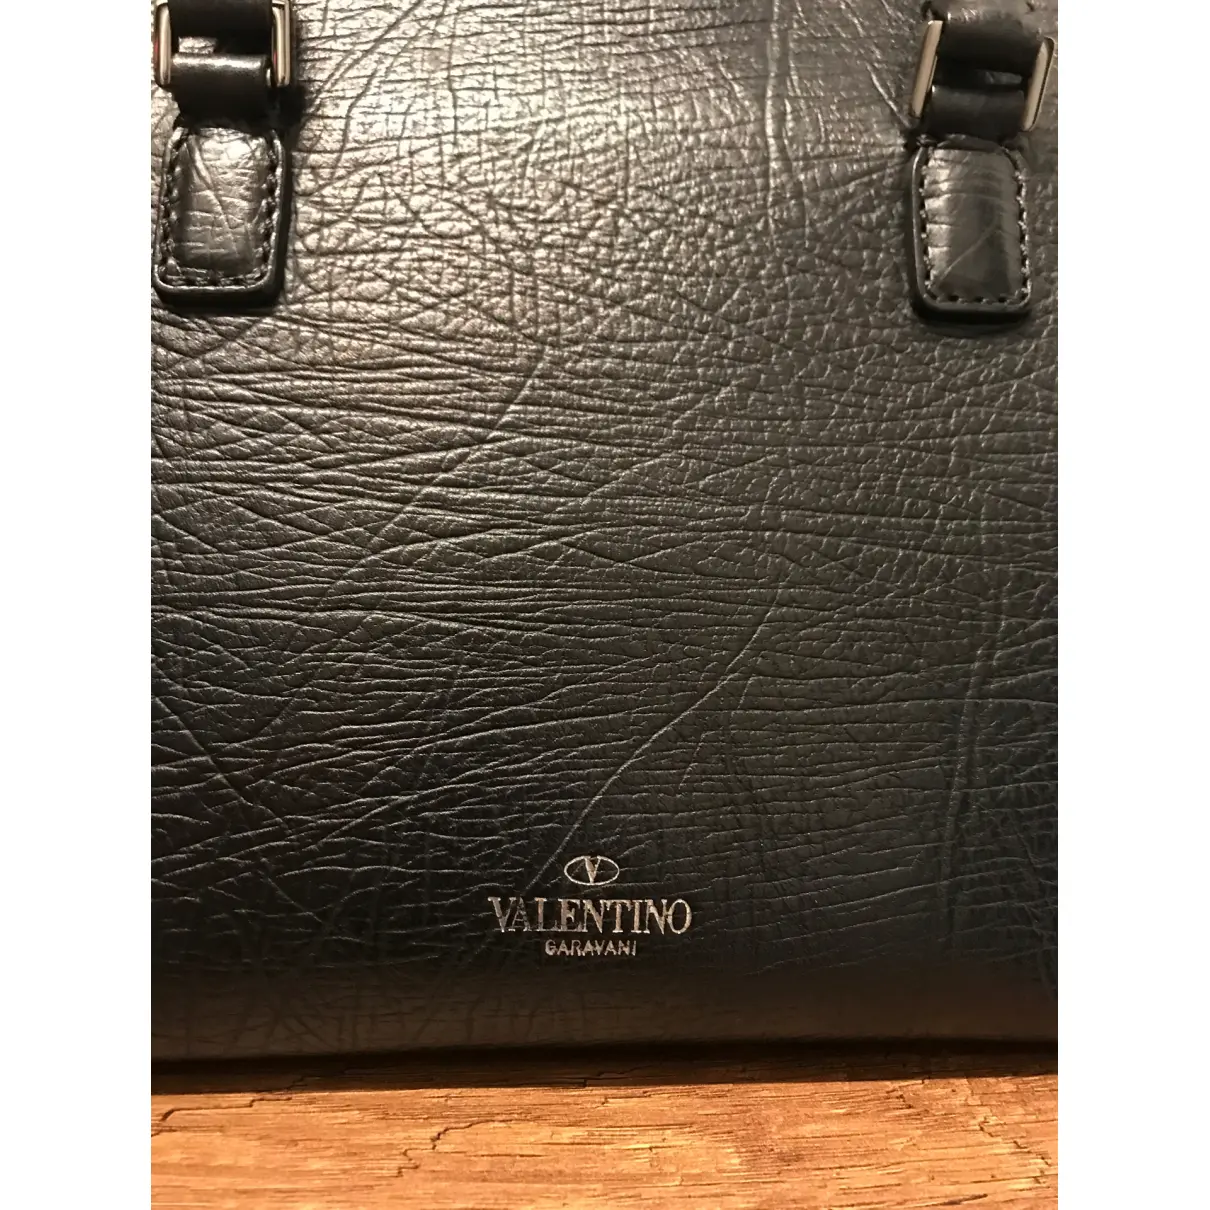 Buy Valentino Garavani Micro Rockstud leather handbag online